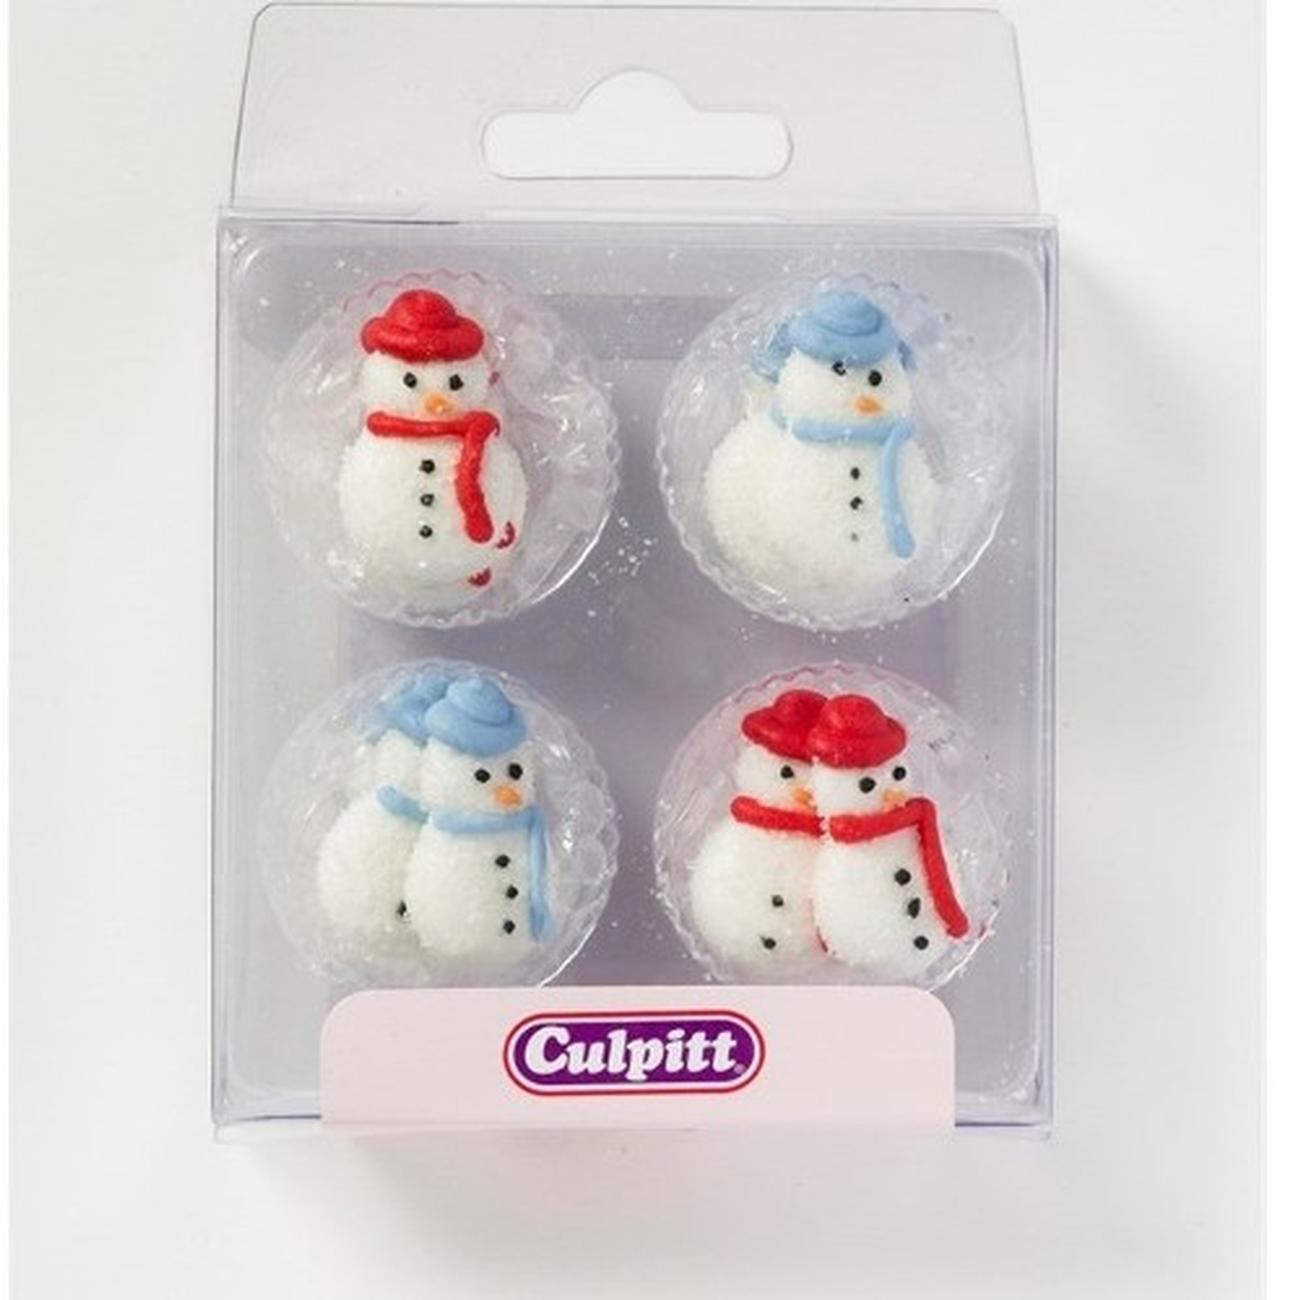 culpitt-sugar-decorations-snowmen-12pc - Culpitt Sugar Piping Snowmen 12pc